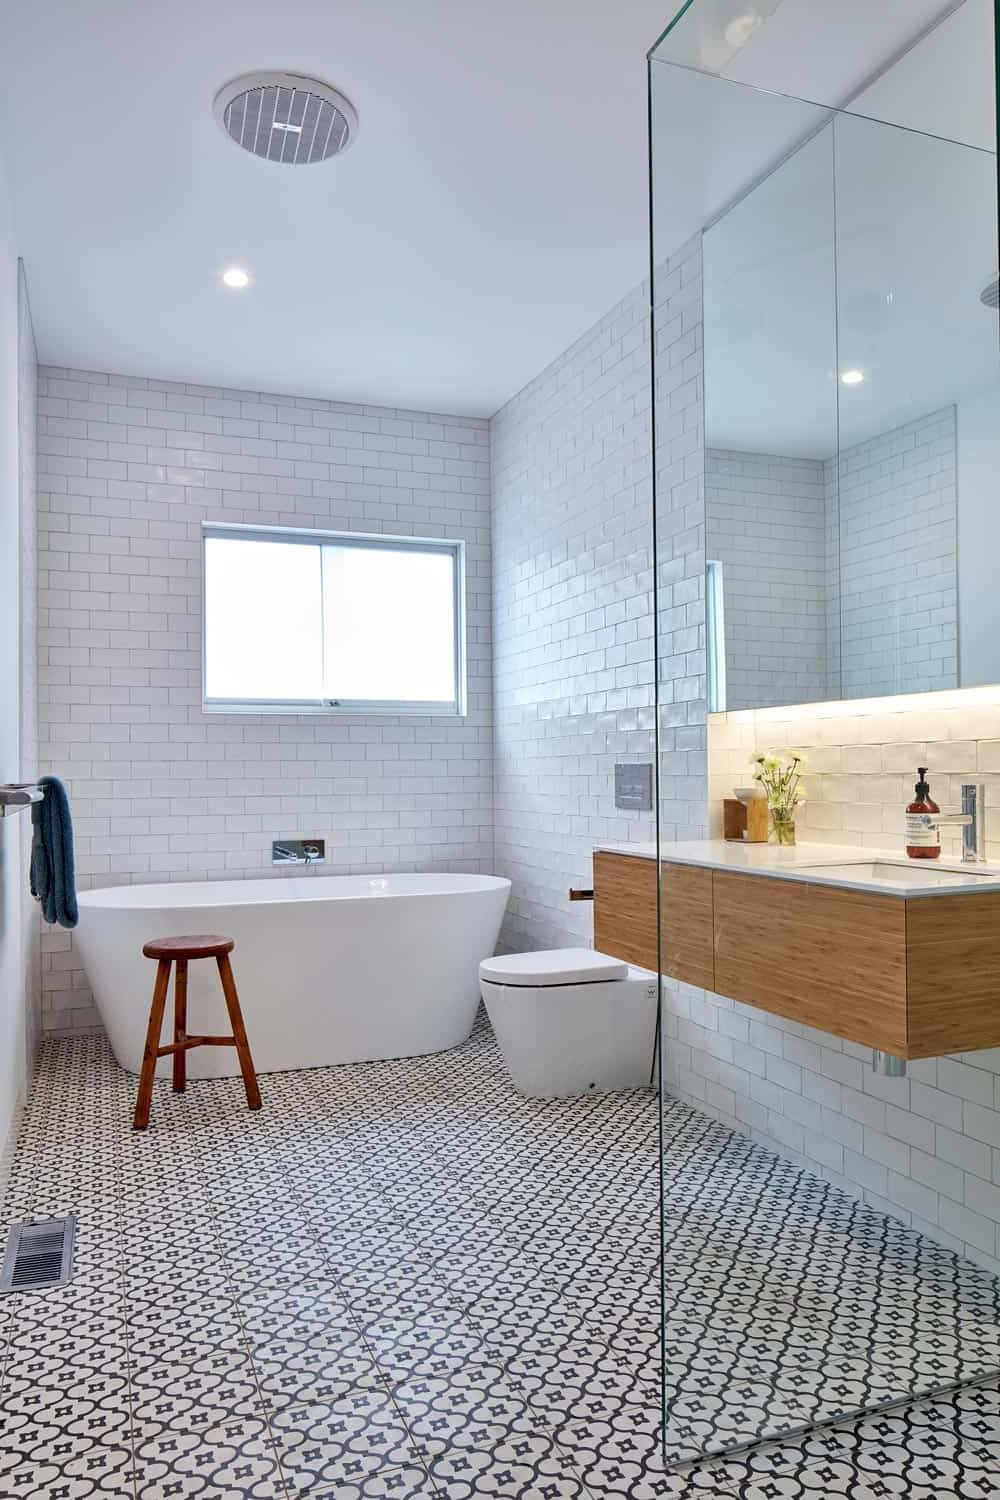 Simple modernist bath looks almost Scandinavian